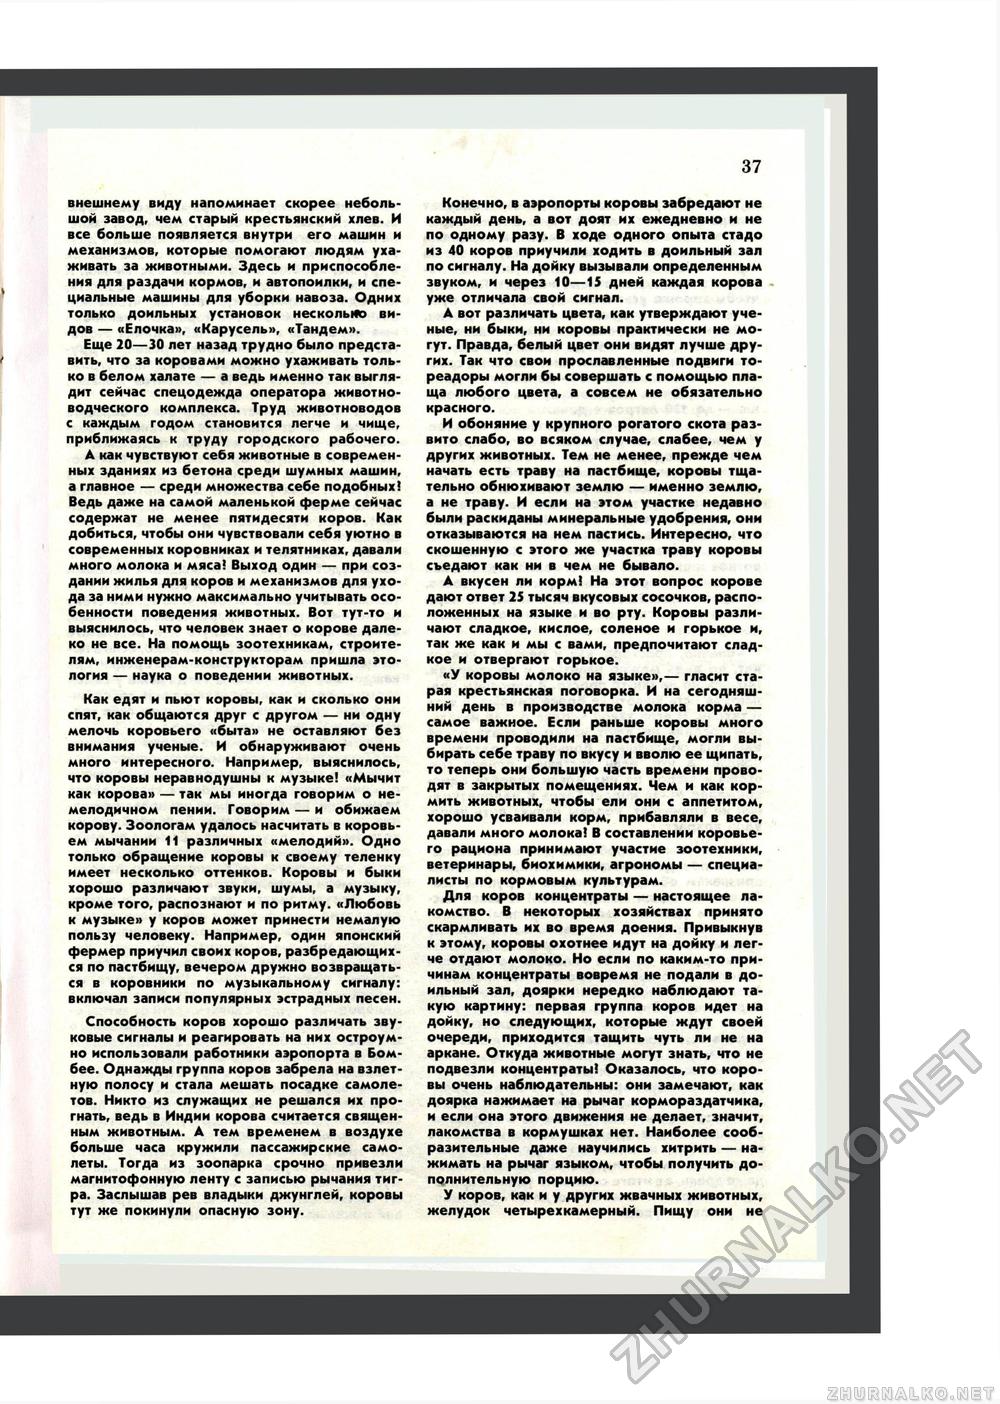 Юный Натуралист 1984-05, страница 39